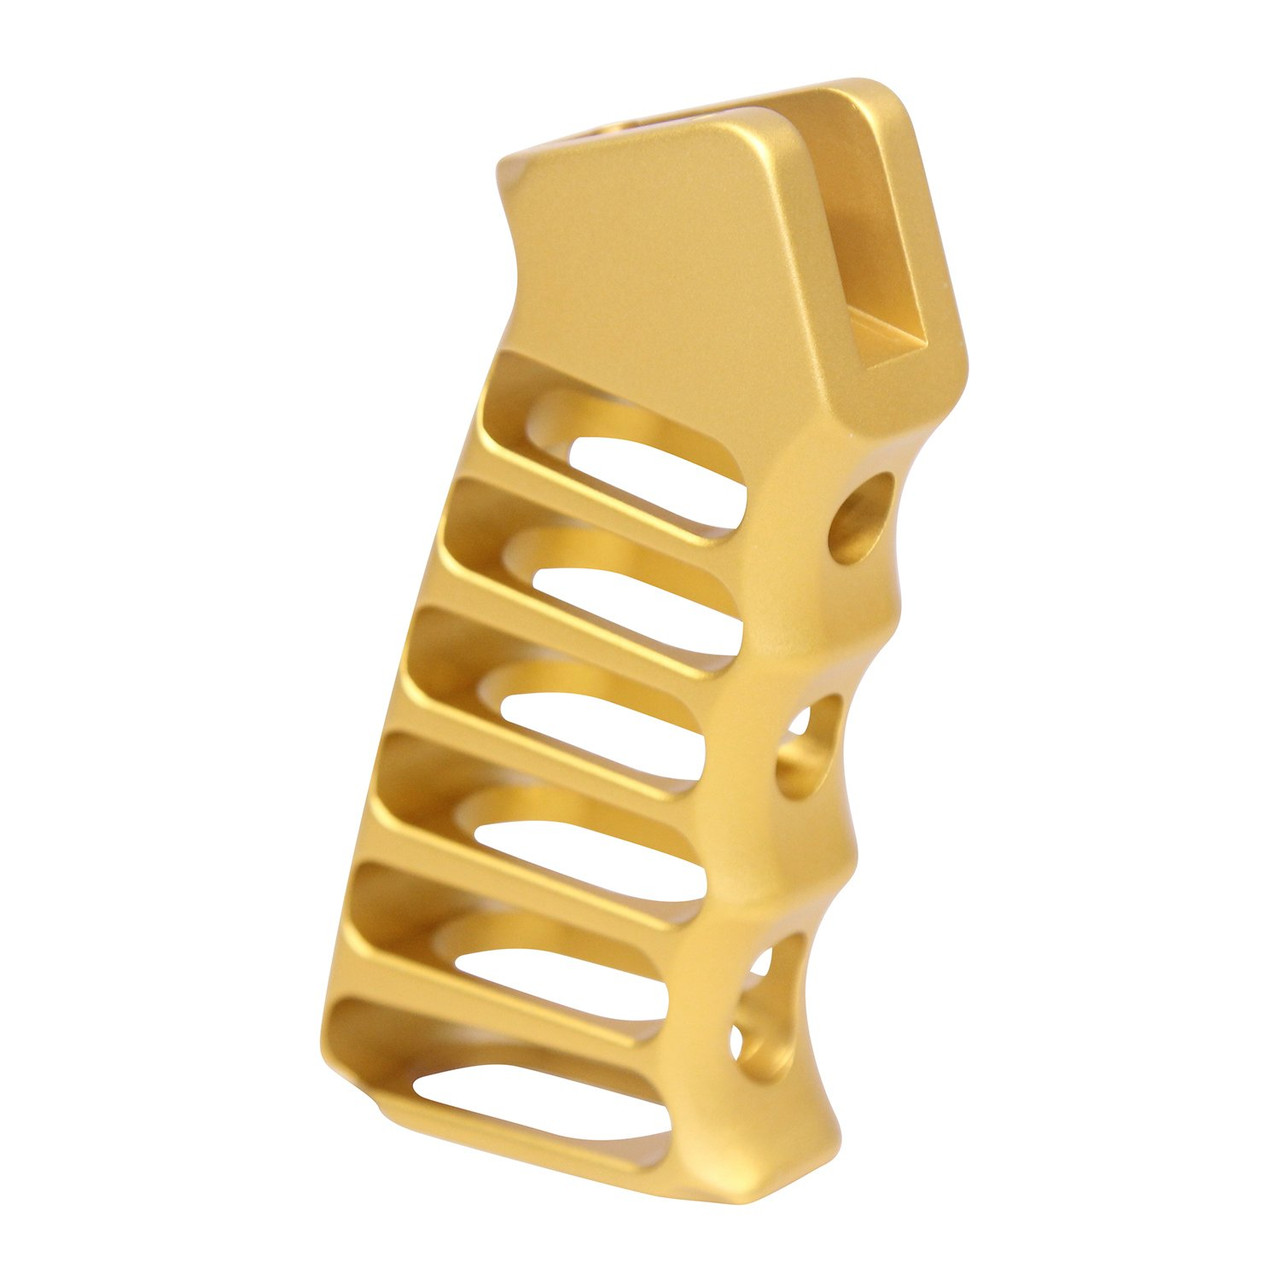 Guntec USA ULS-PG-GOLD Ultralight Series Skeletonized Aluminum Pistol Grip (Anodized Gold)